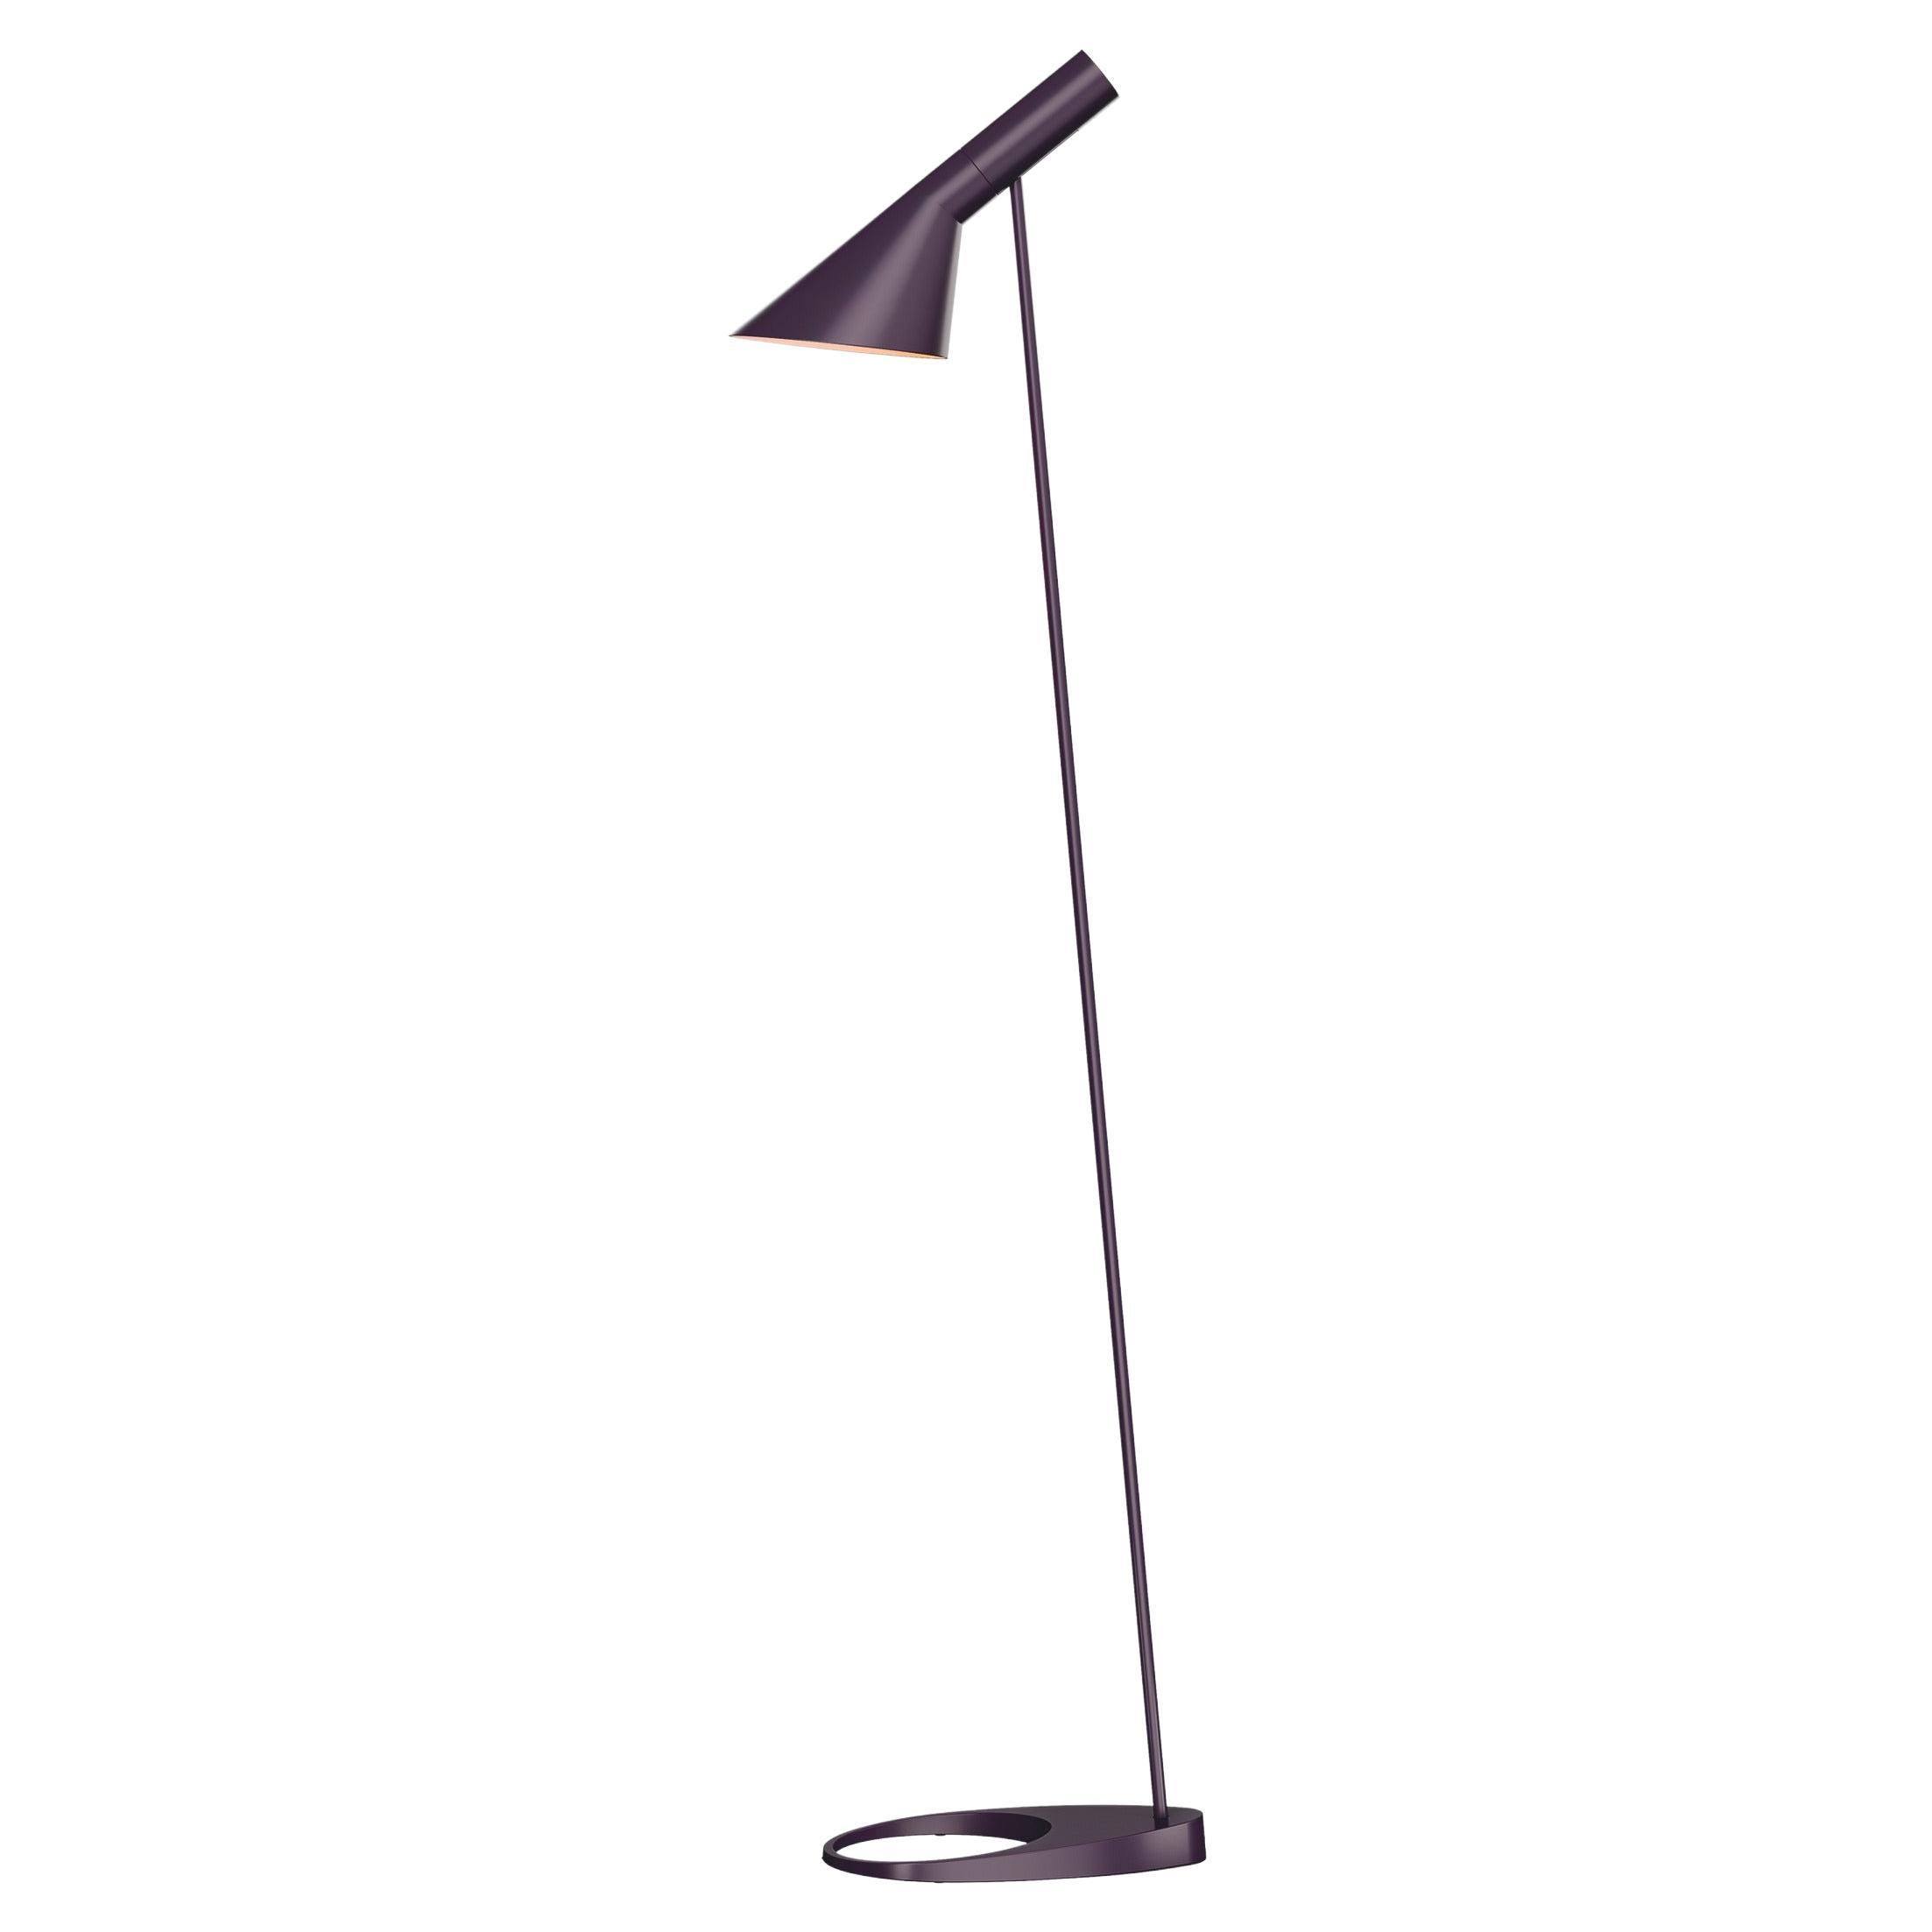 Louis Poulsen AJ Floor Lamp in Aubergine by Arne Jacobsen